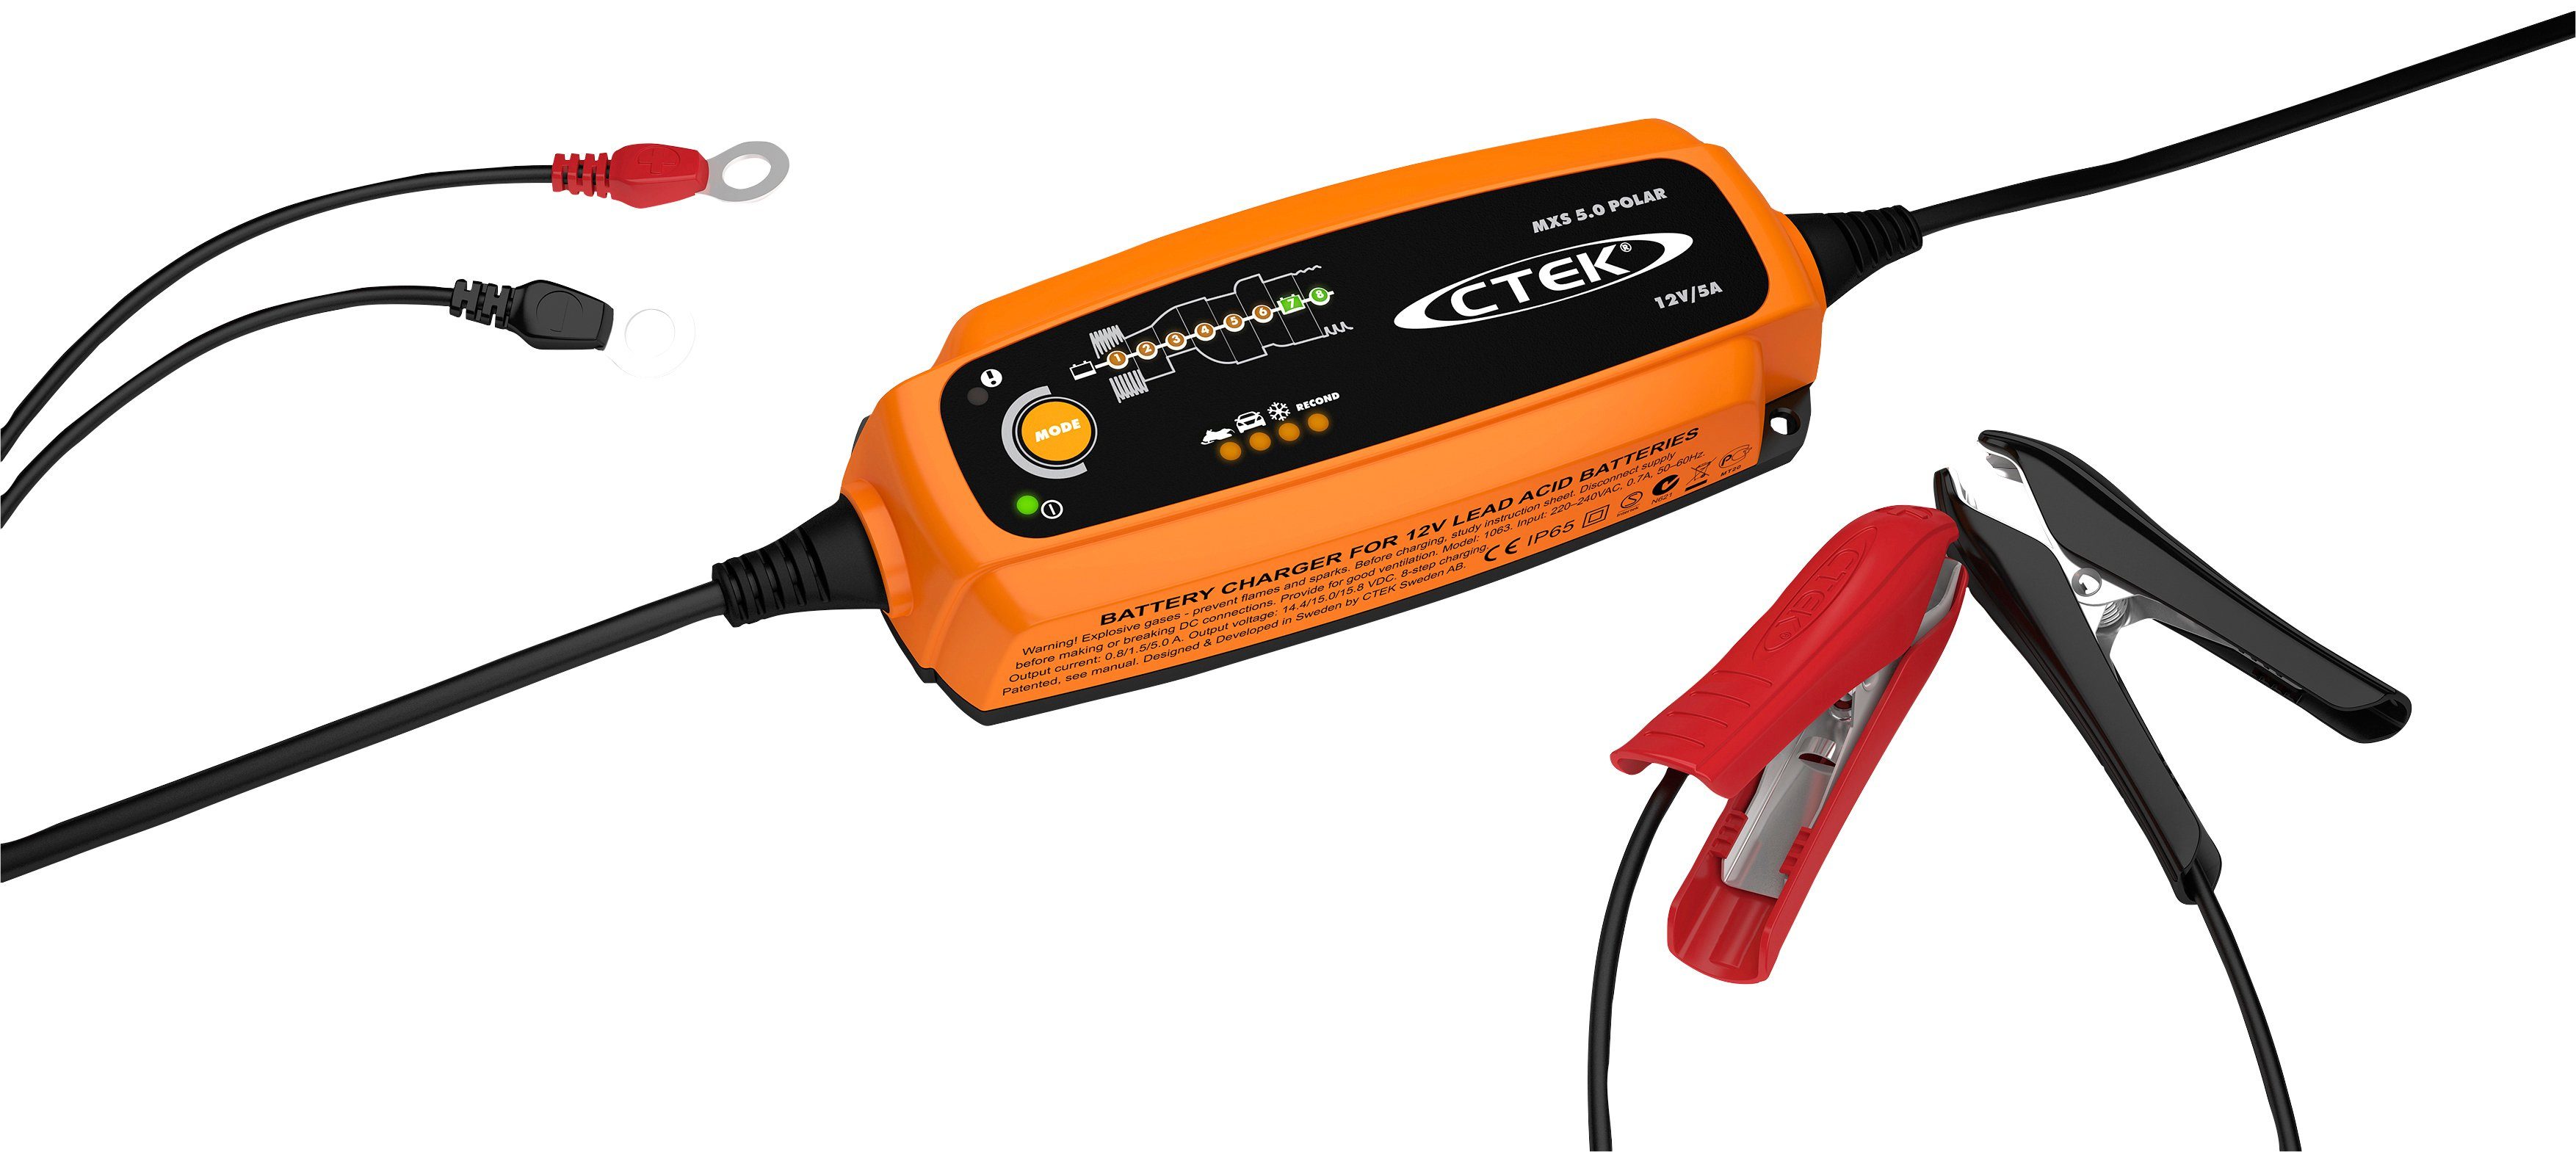 CTEK Autobatterie-Ladegeräte online kaufen